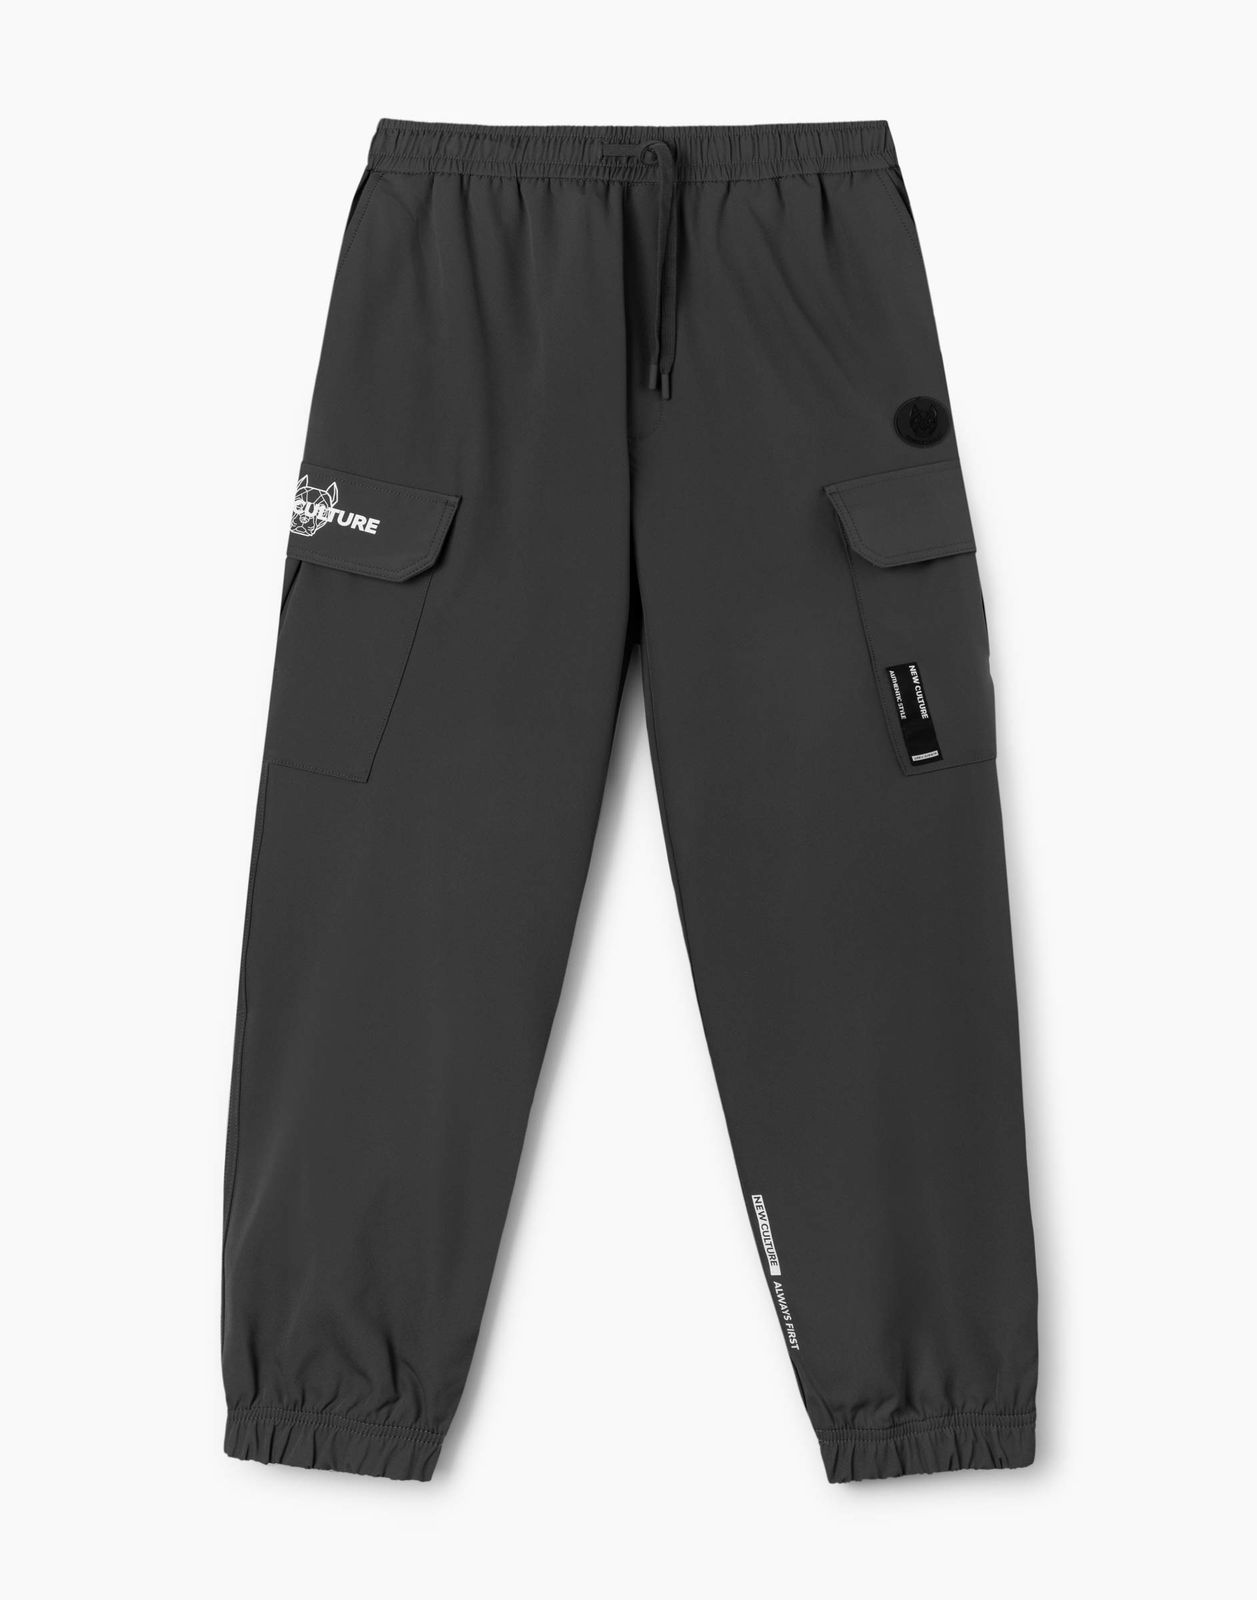 Спортивные брюки мужские Gloria Jeans BJN013817 серые XXL/182 (56)